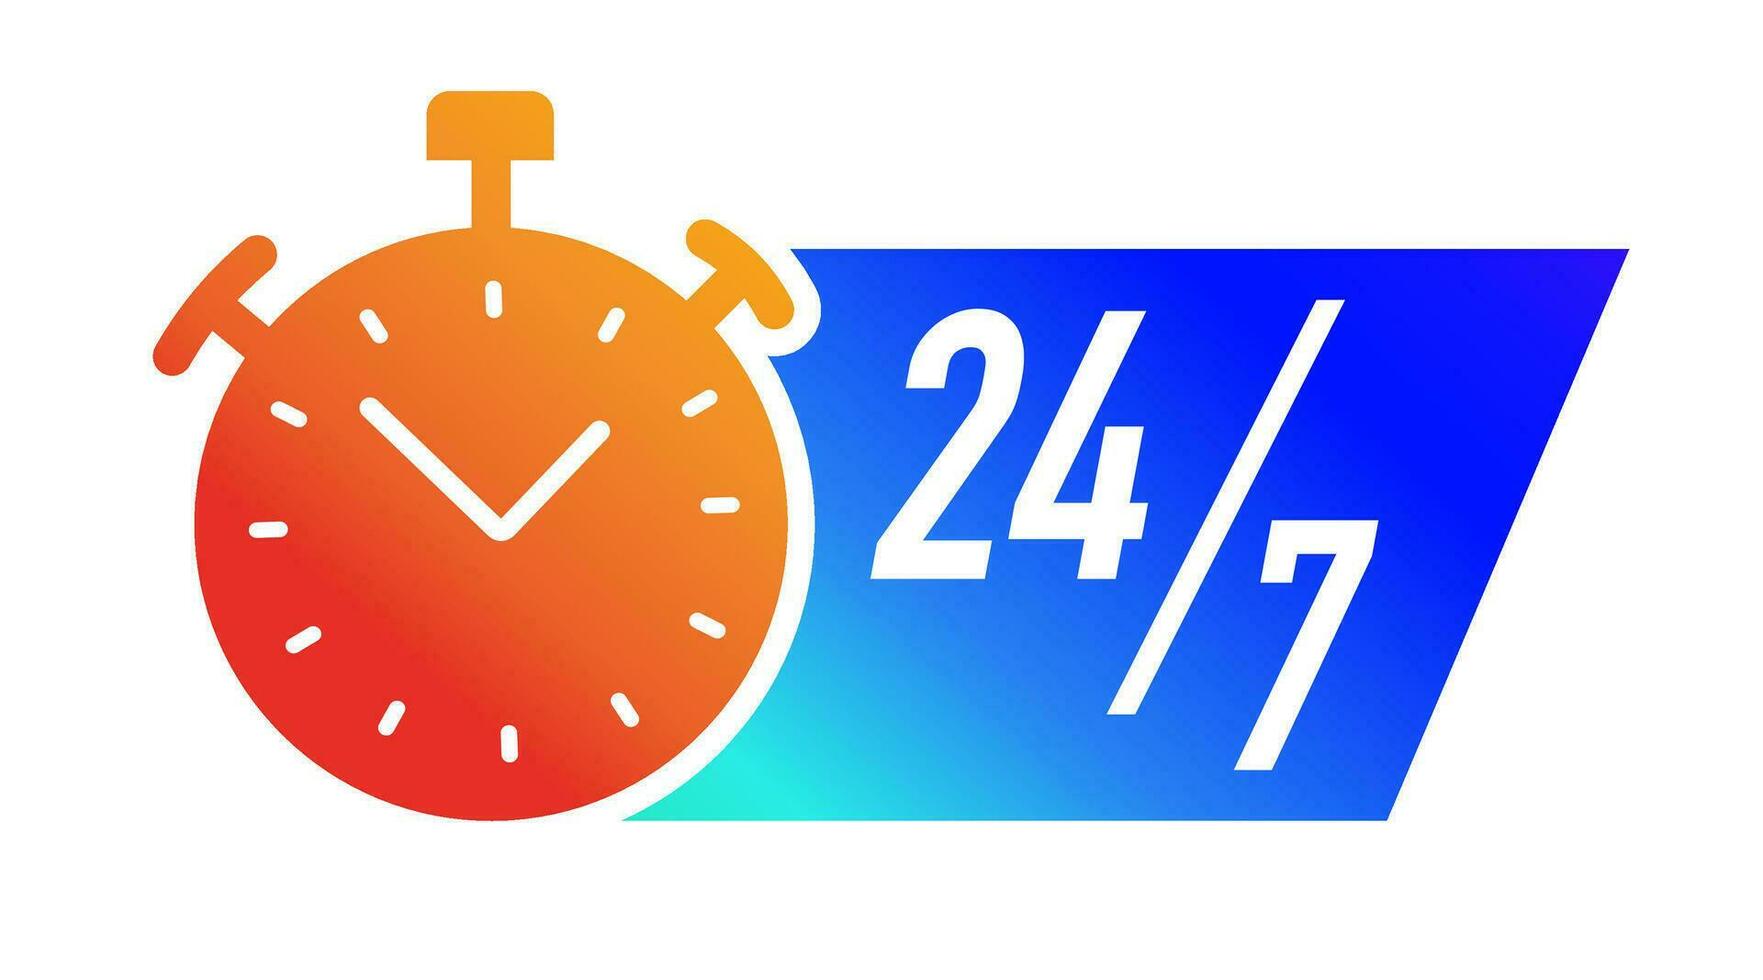 24 7 uren timer symbool kleur stijl vector